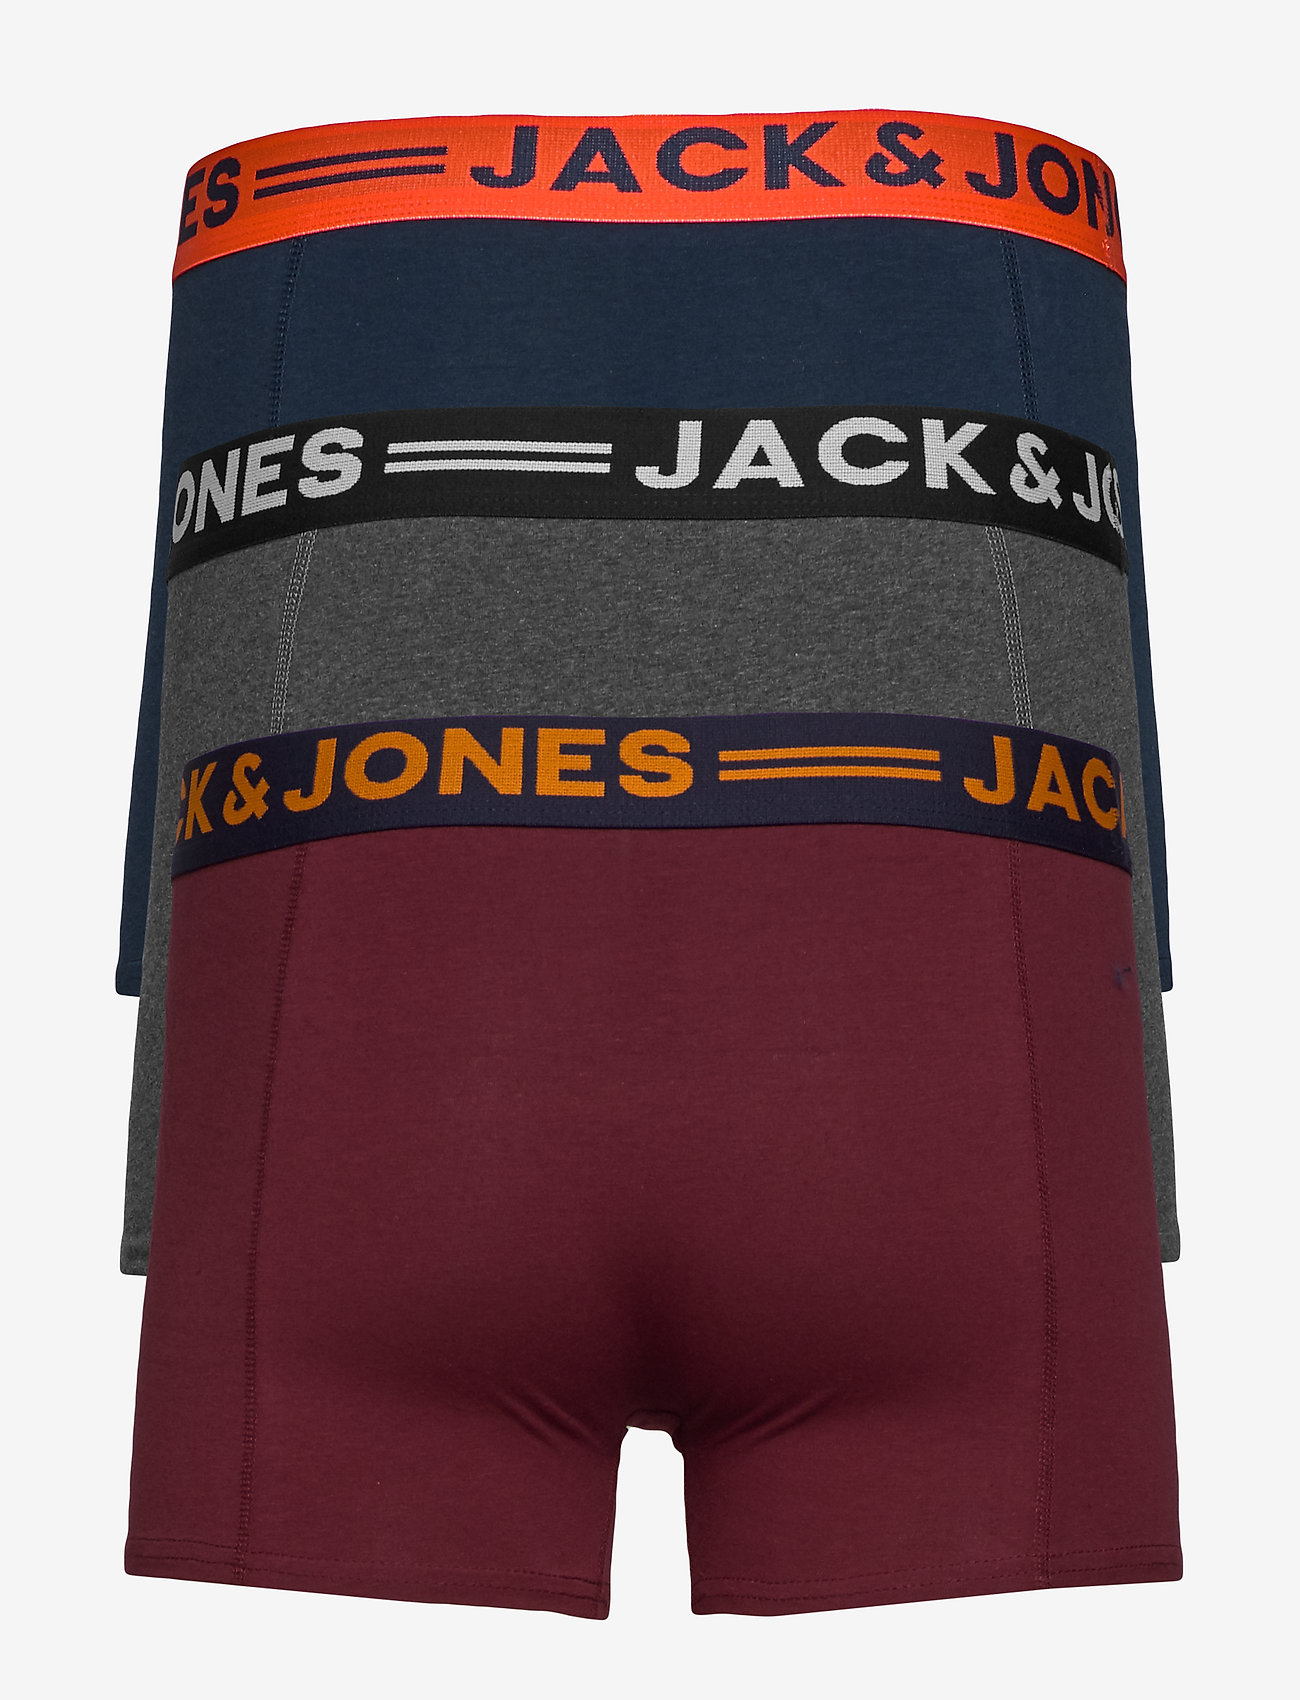 Jack & Jones Mens New 3 Pack Trunks Boxer Shorts Underwear Burgundy Navy Grey 